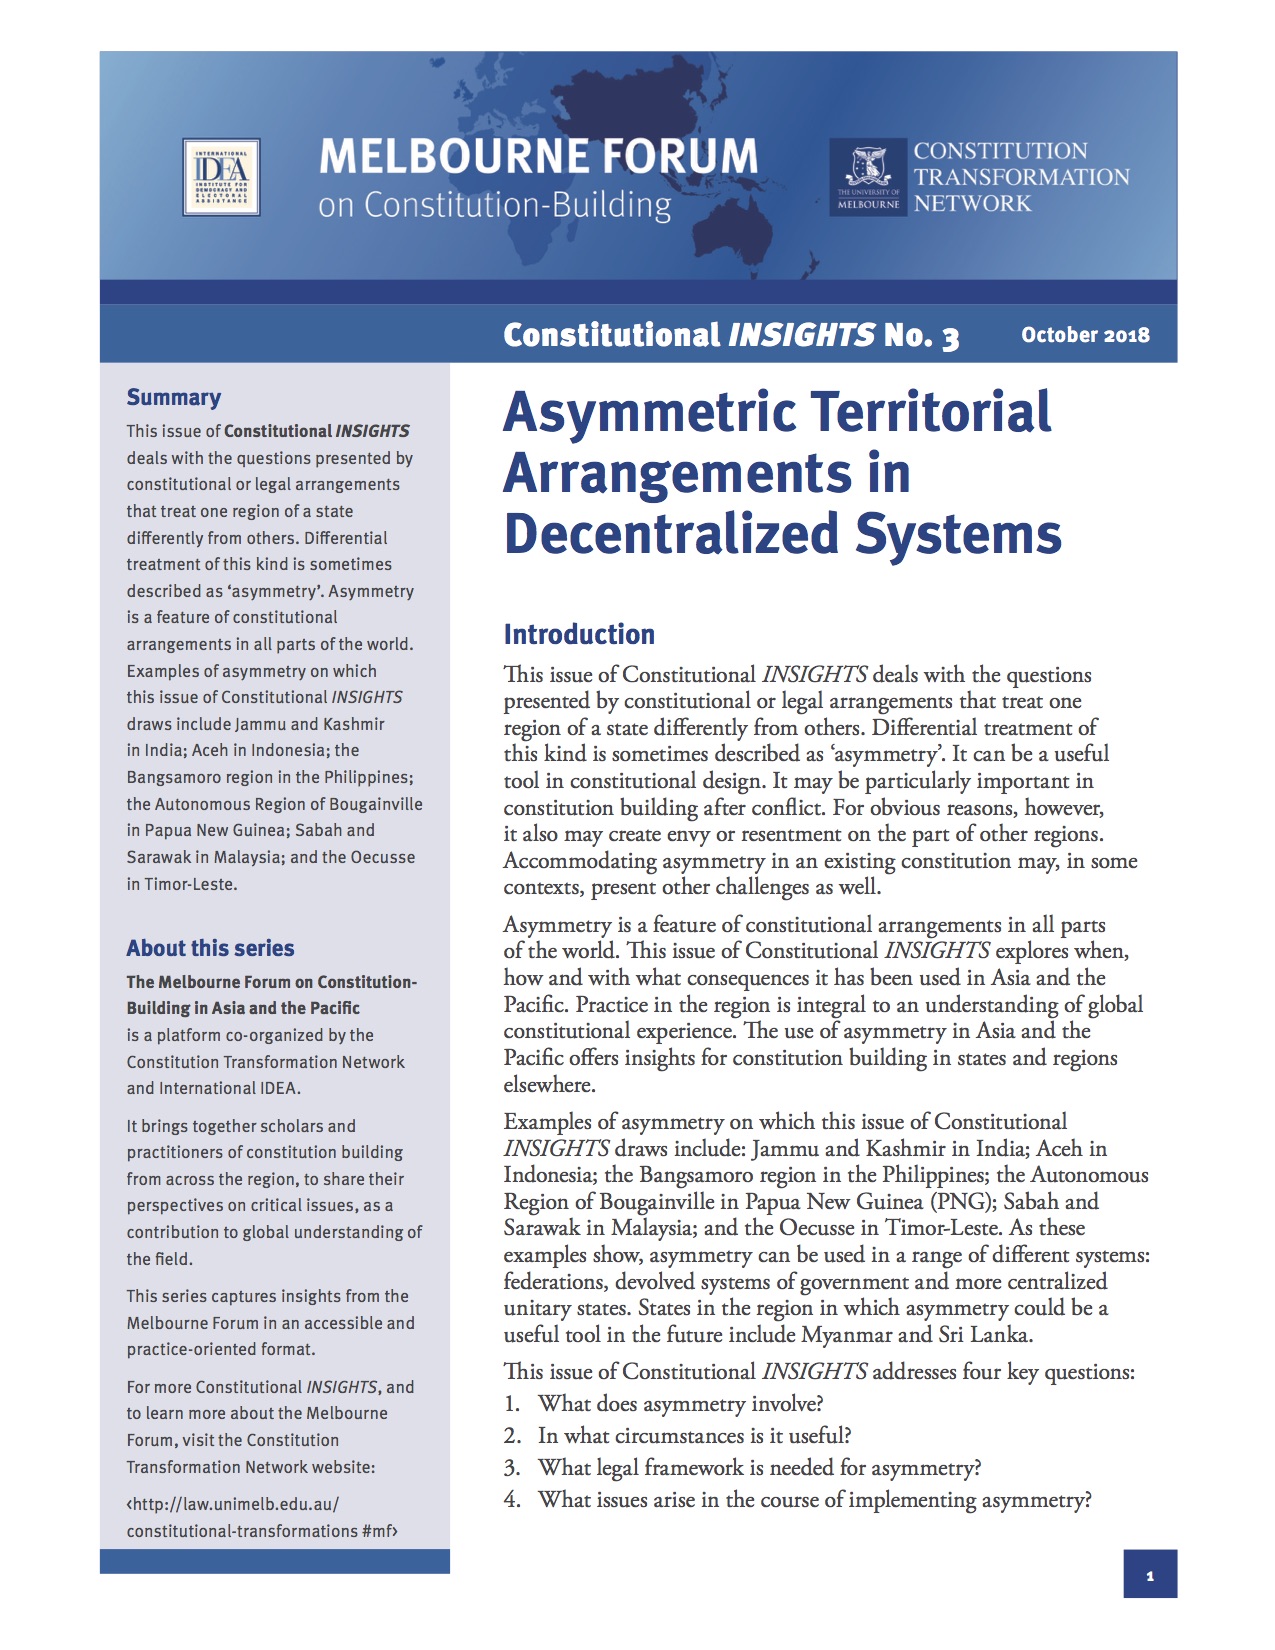 Asymmetric Territorial Arrangements in Decentralized Systems